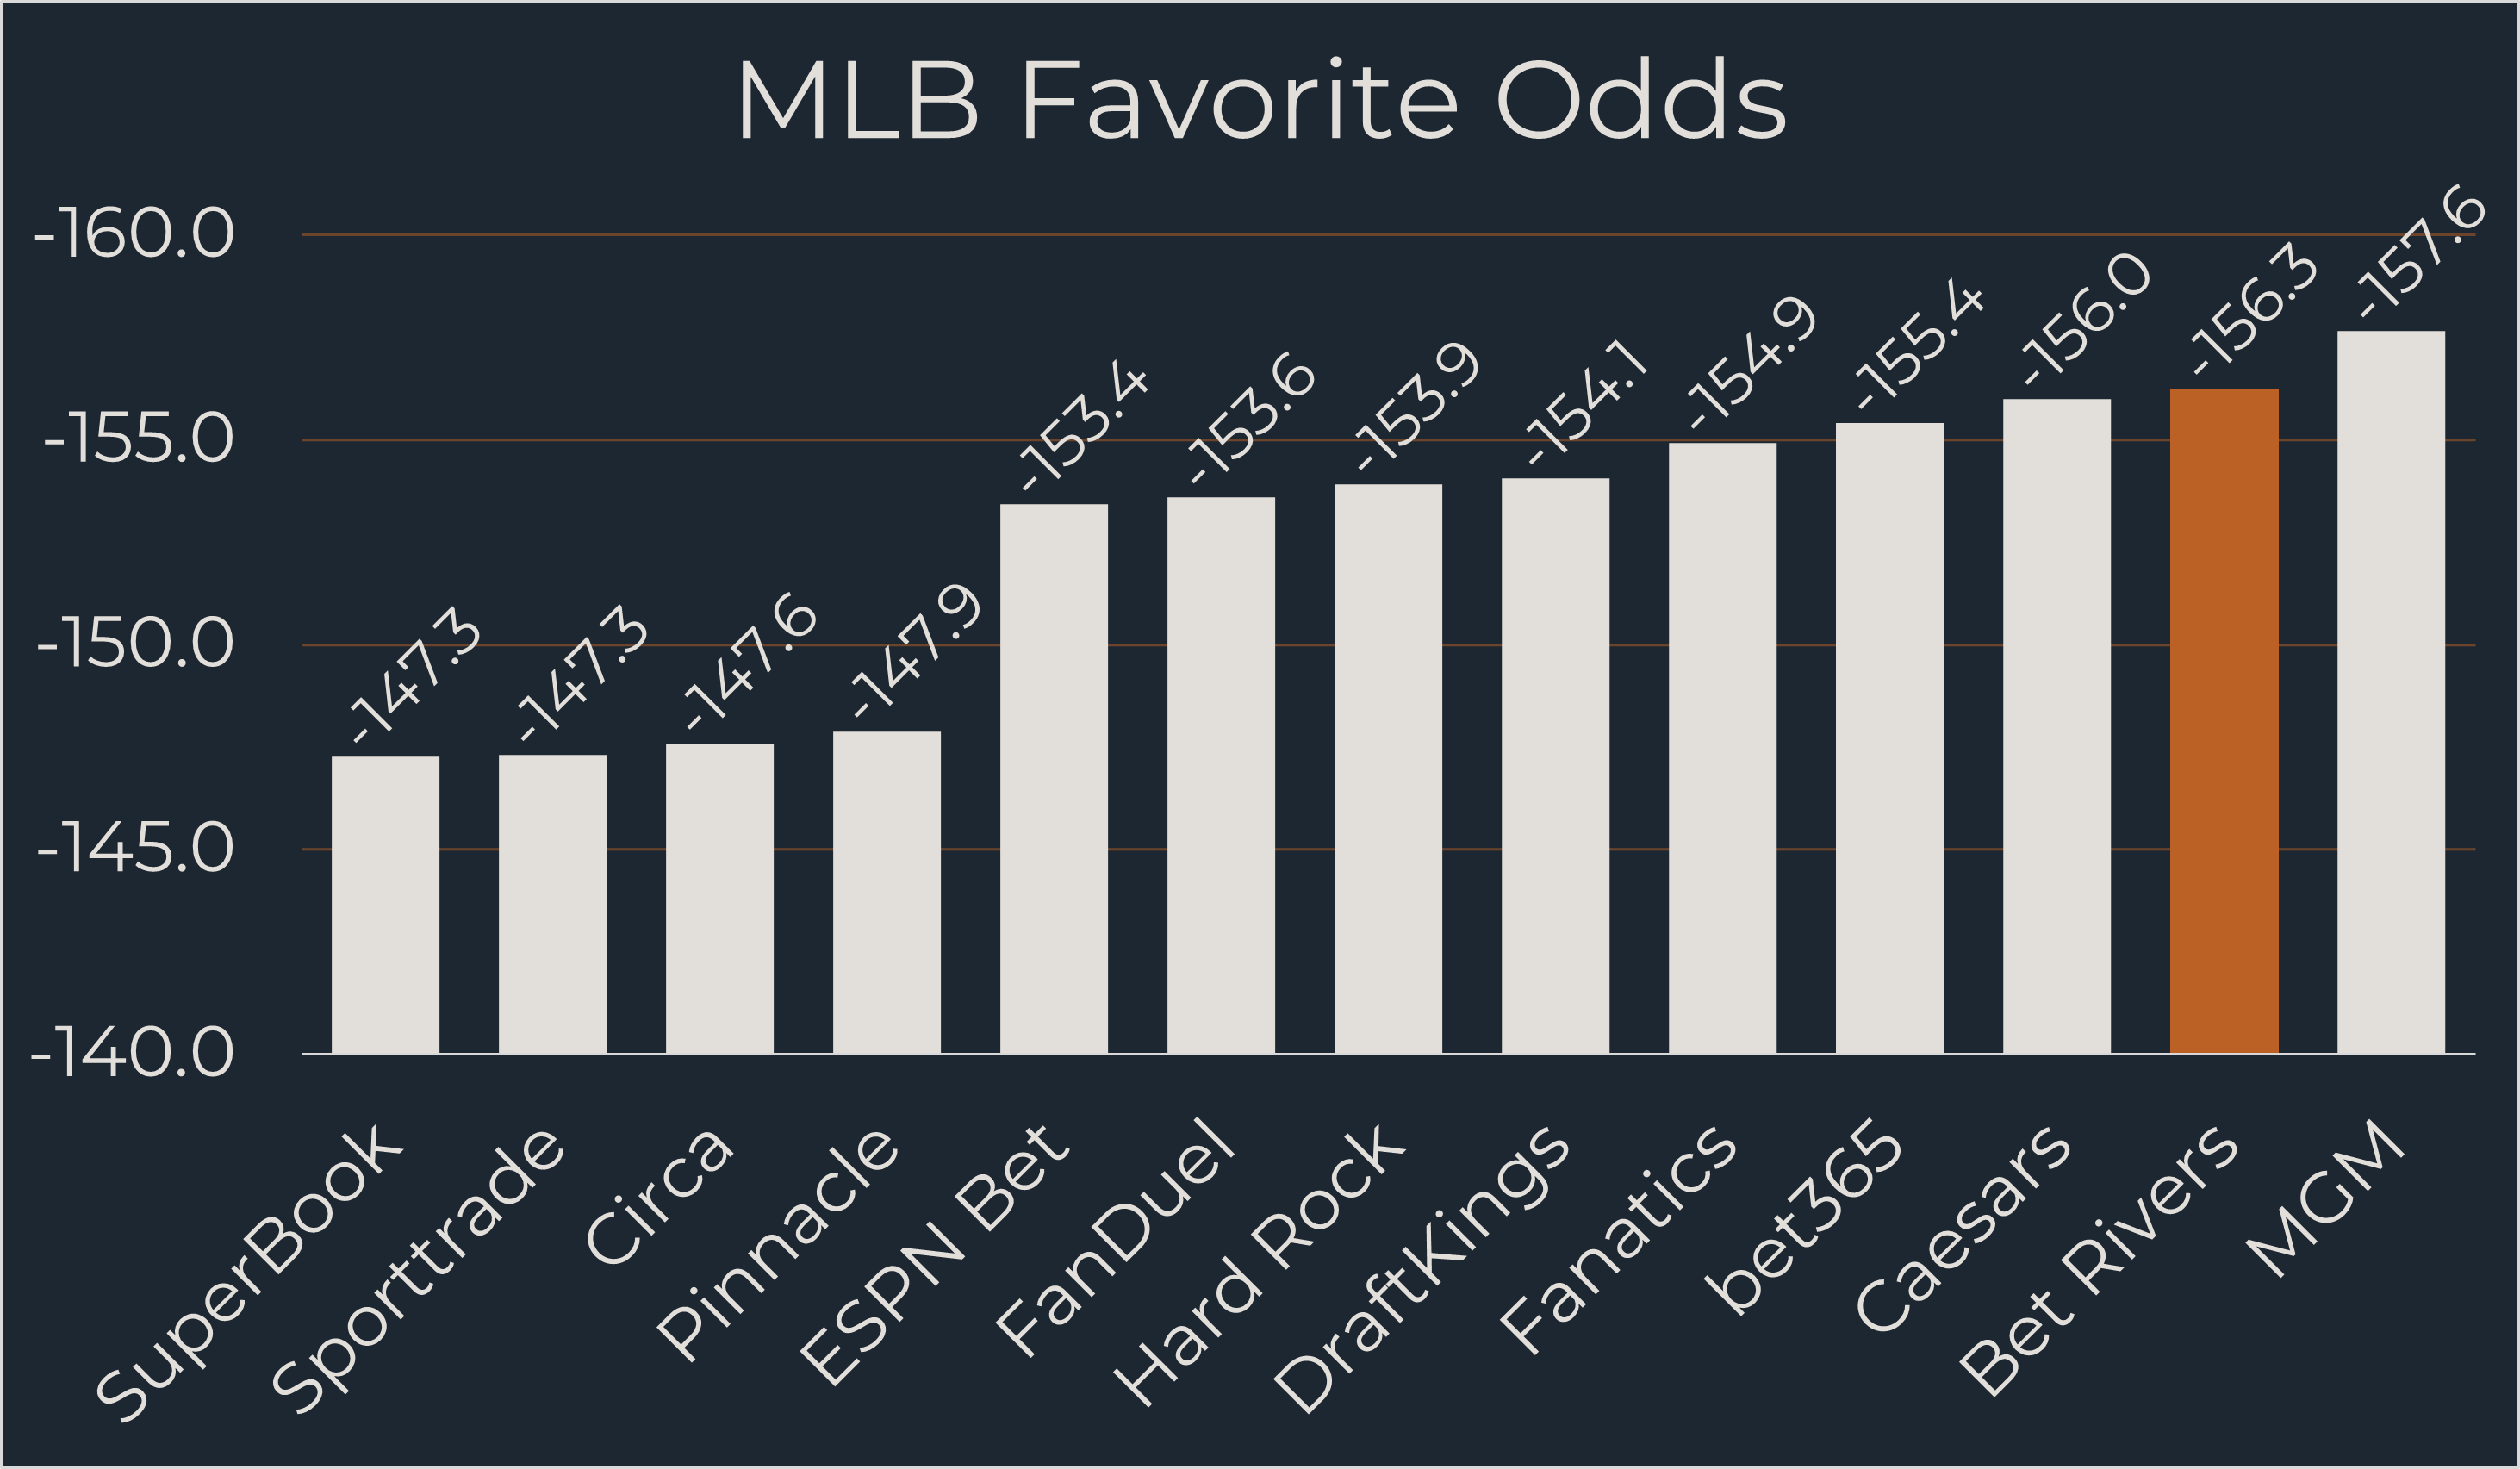 BetRivers MLB Odds comparison chart